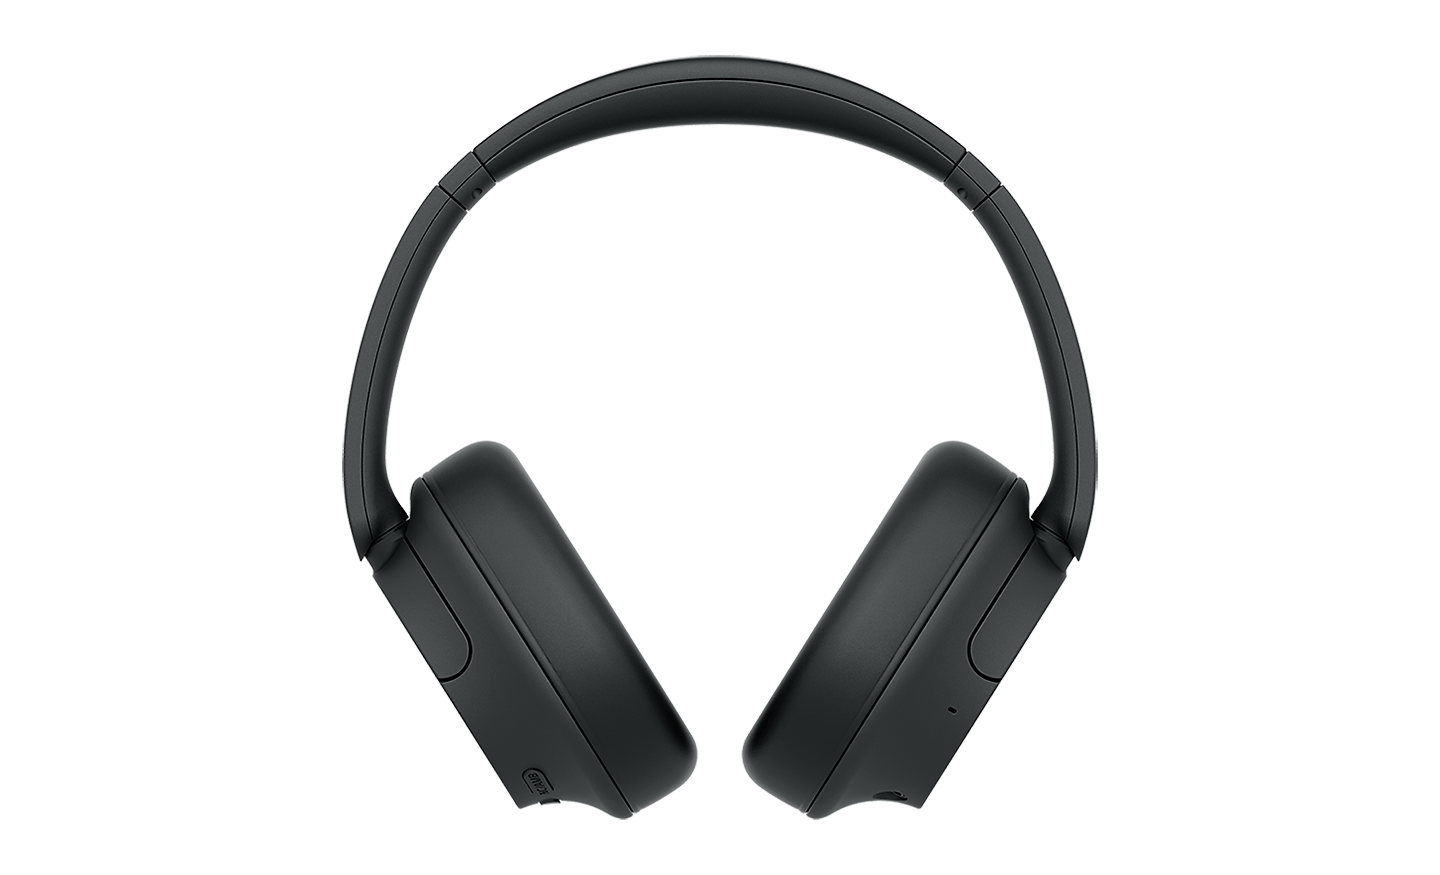 Slika crnih Sony WH-CH720 slušalica na beloj pozadini